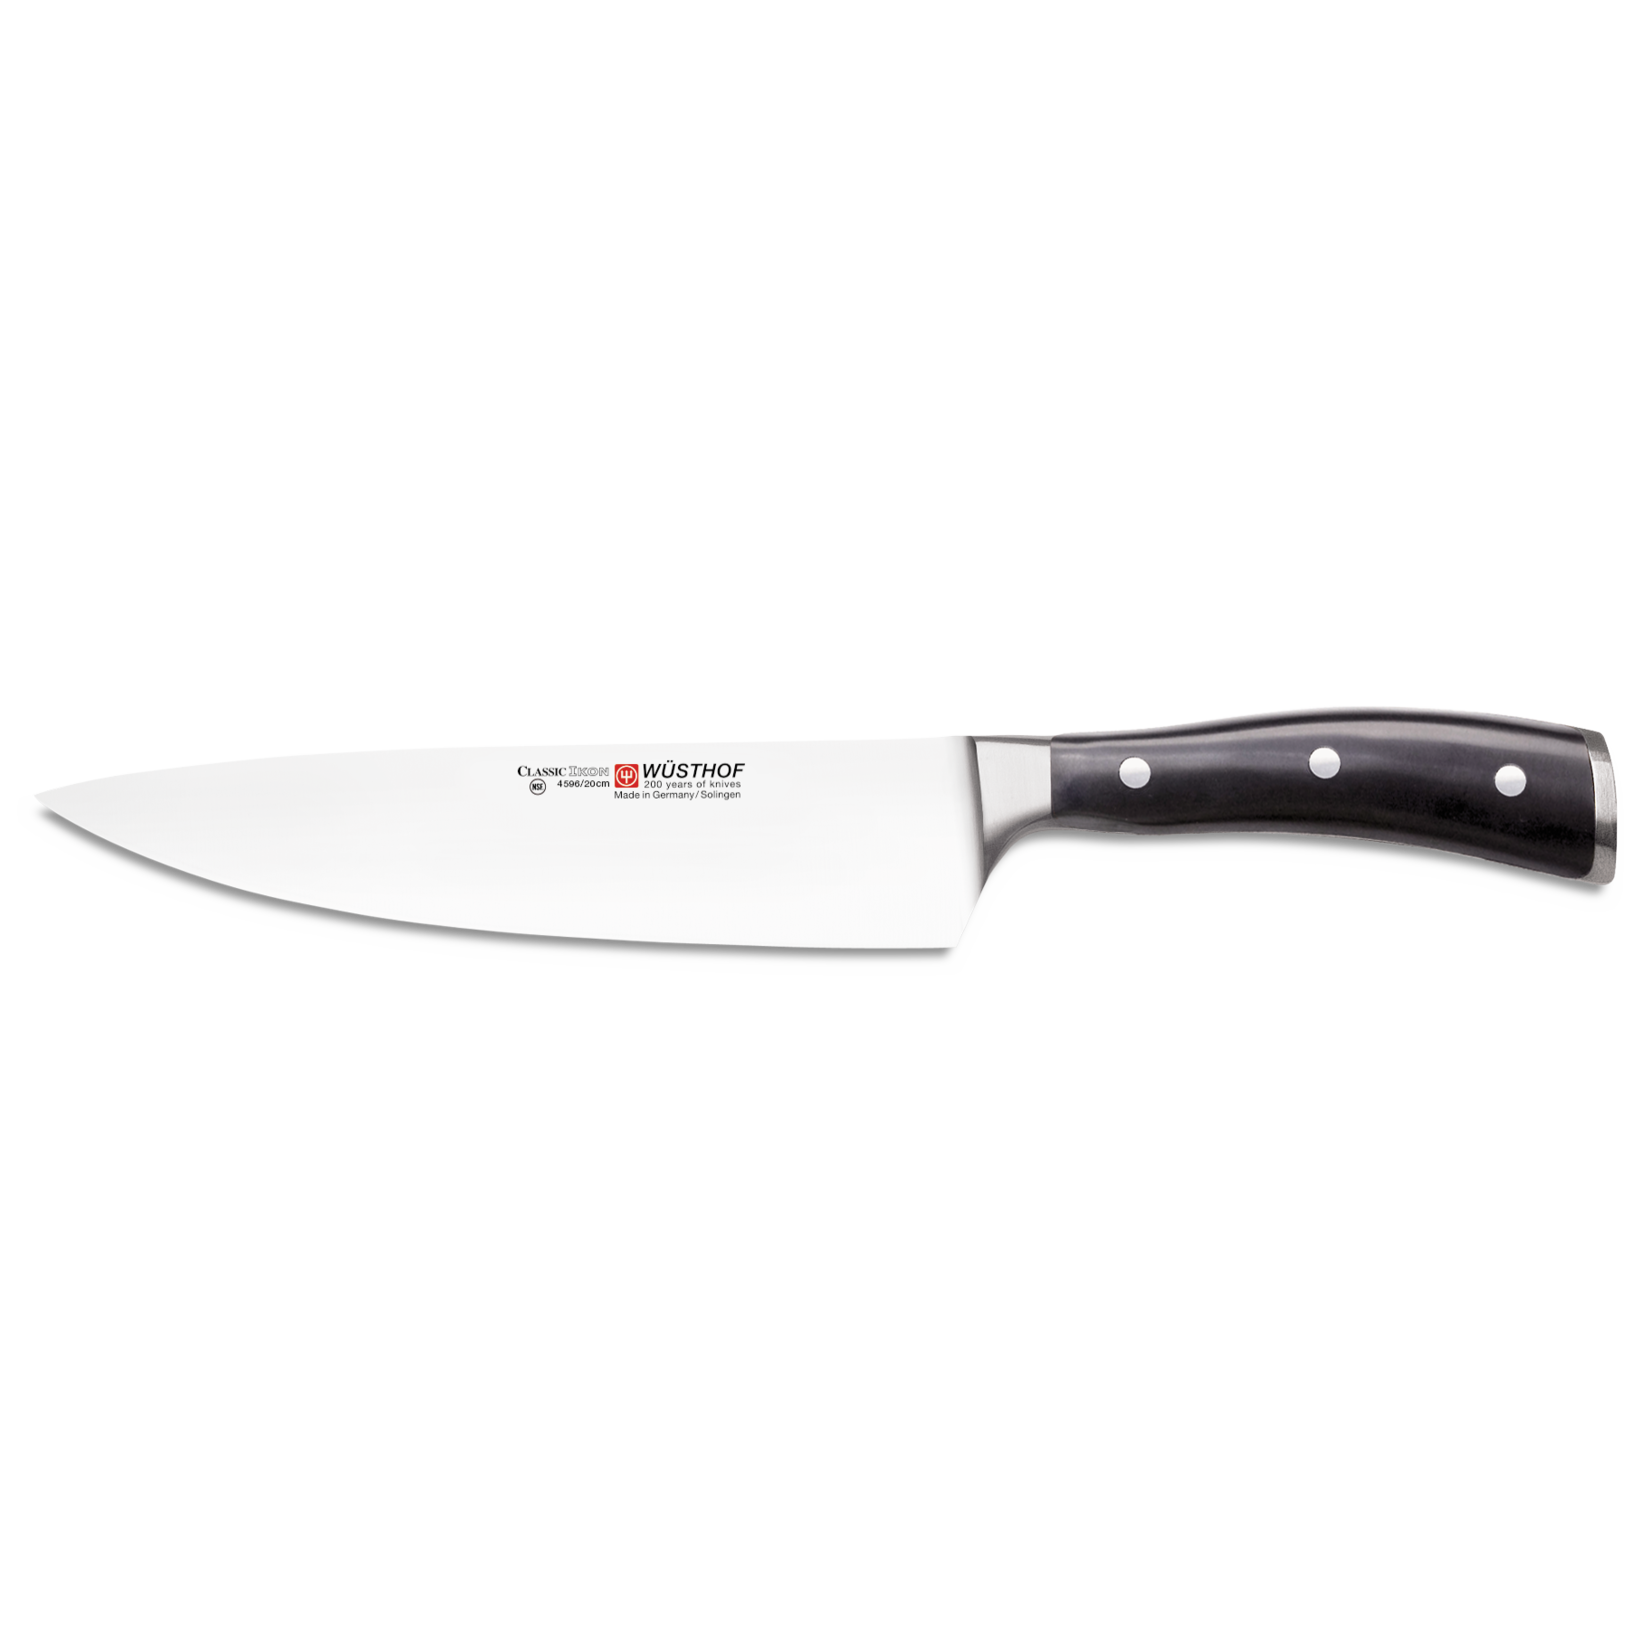 WUSTHOF WUSTHOF Classic Ikon Chef's Knife 8"